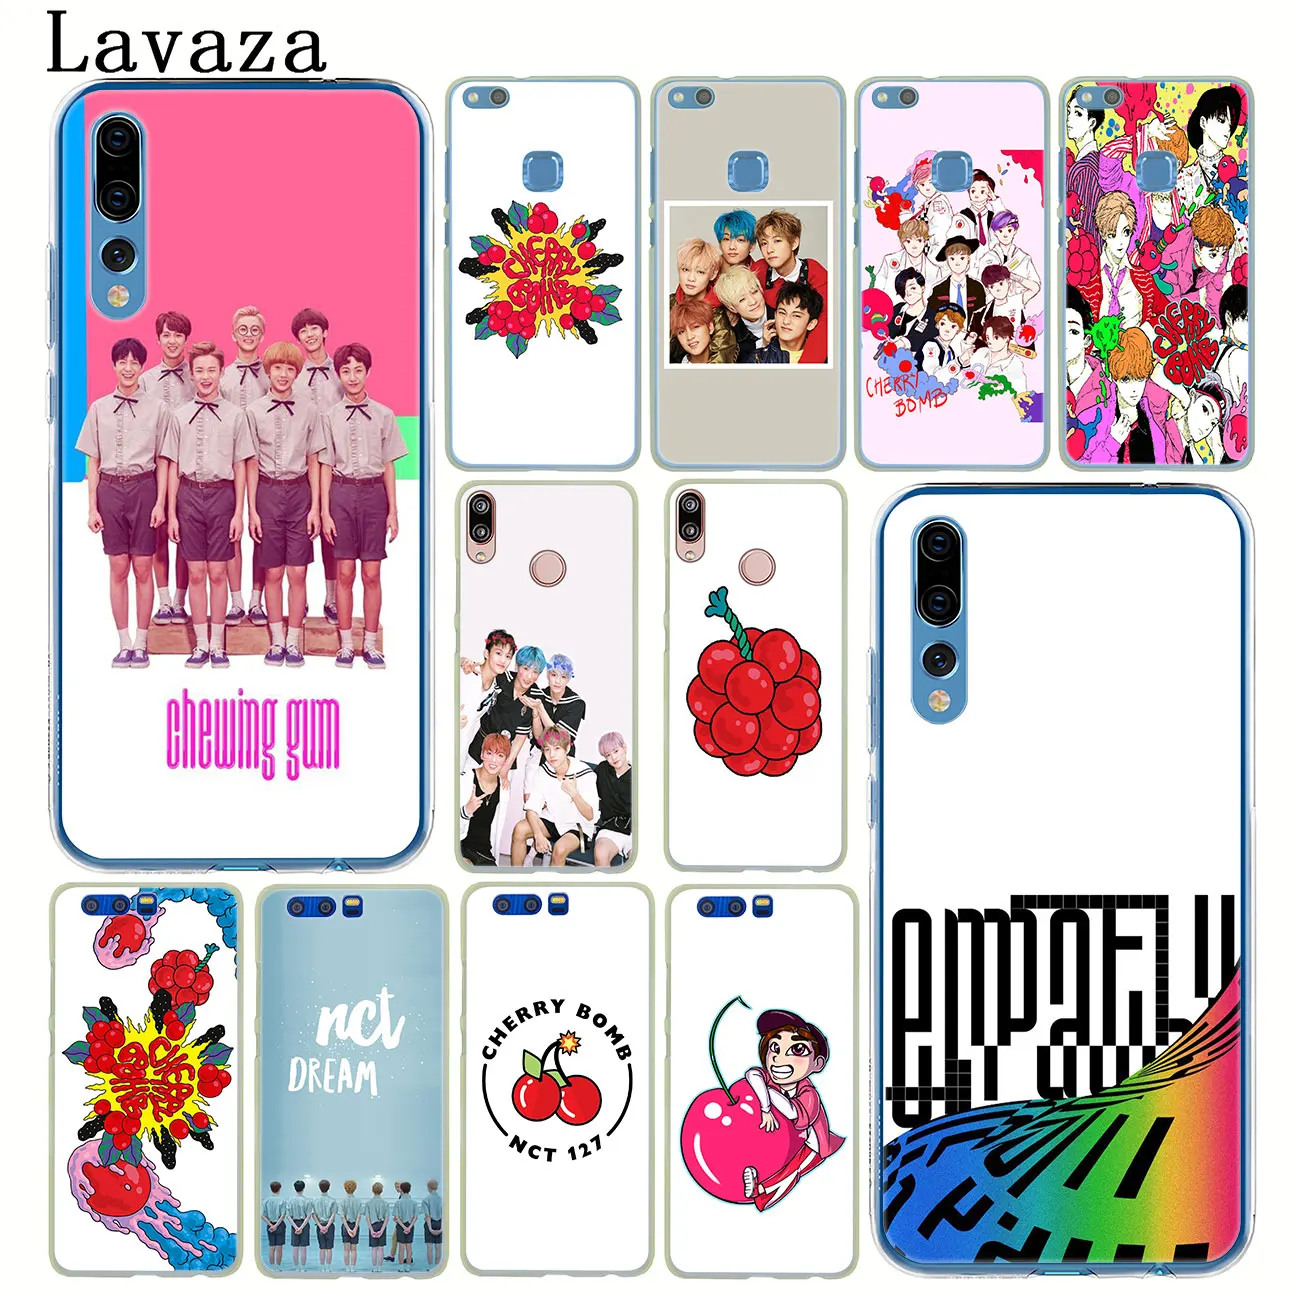 

lavaza kpop NCT 127 DREAM U Hard Phone Case for Huawei P30 Pro P20 P10 P9 Plus P8 Lite Mini 2016 2017 P smart Z 2019 Cover